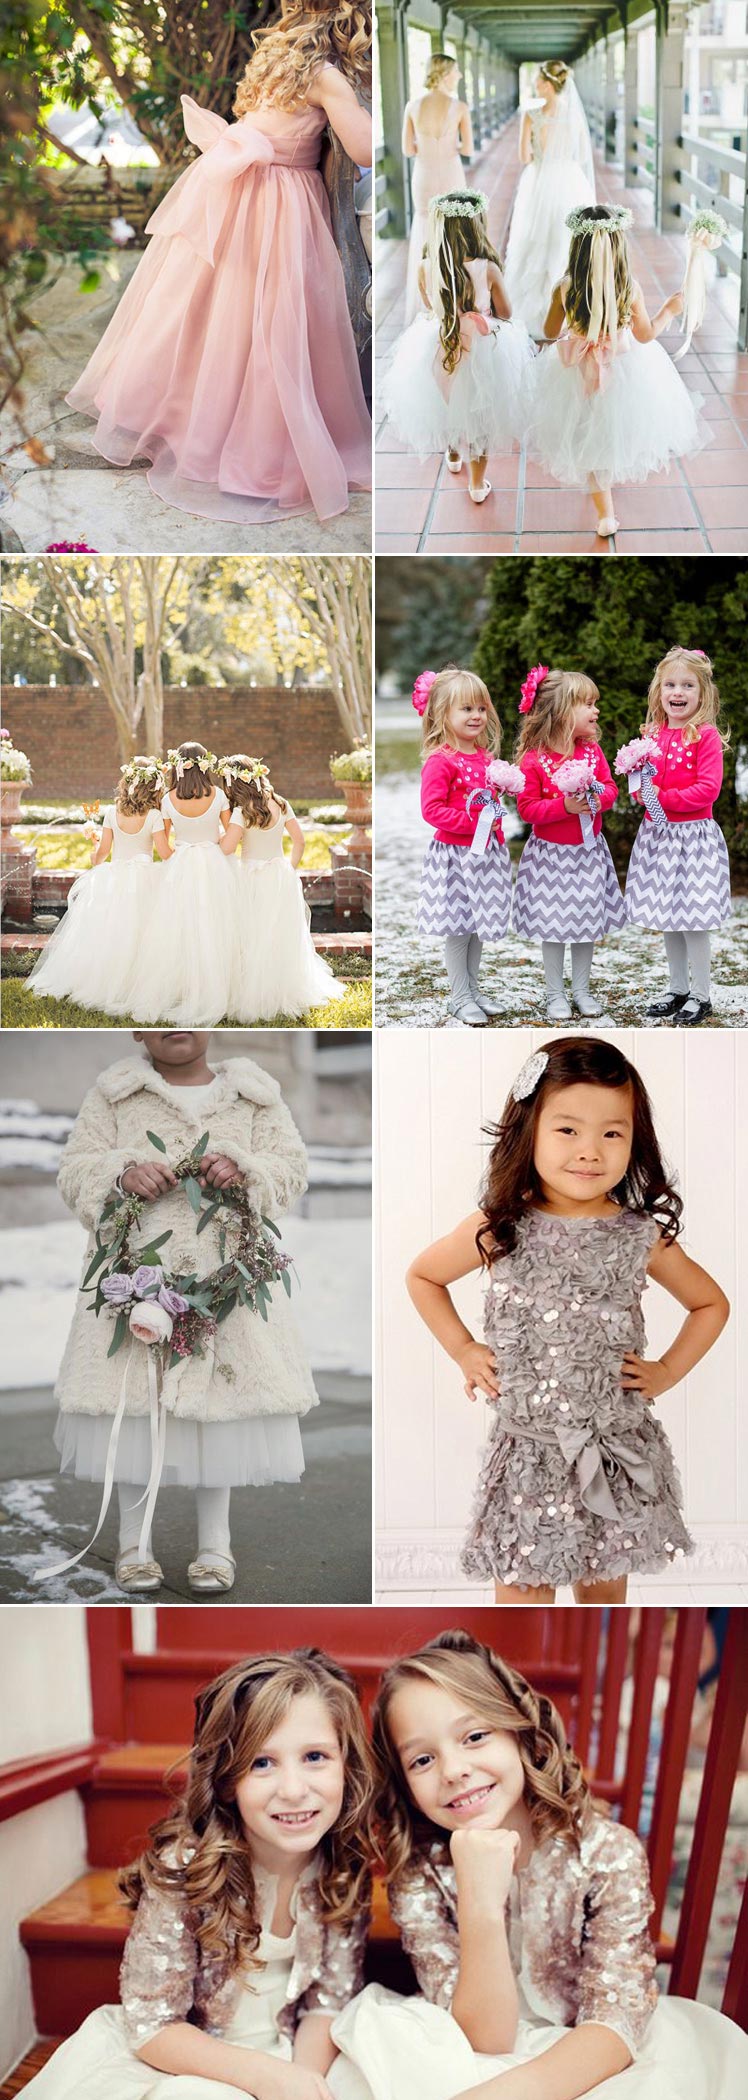 Pretty bridesmaid dress ideas for your flower girls